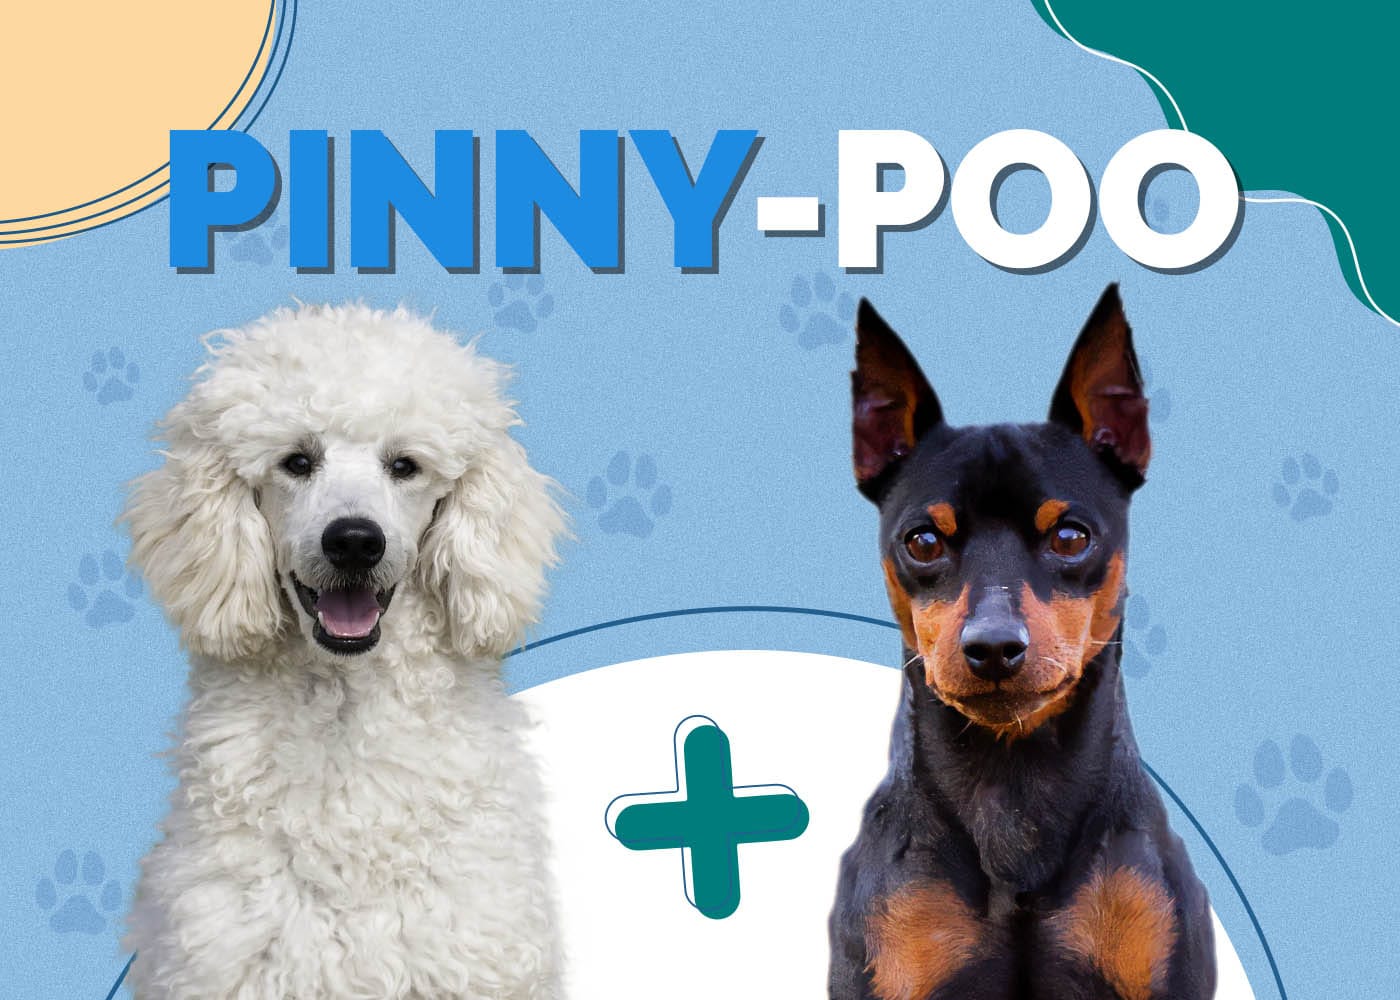 Pinny-Poo (Miniature Pinscher & Poodle Mix)